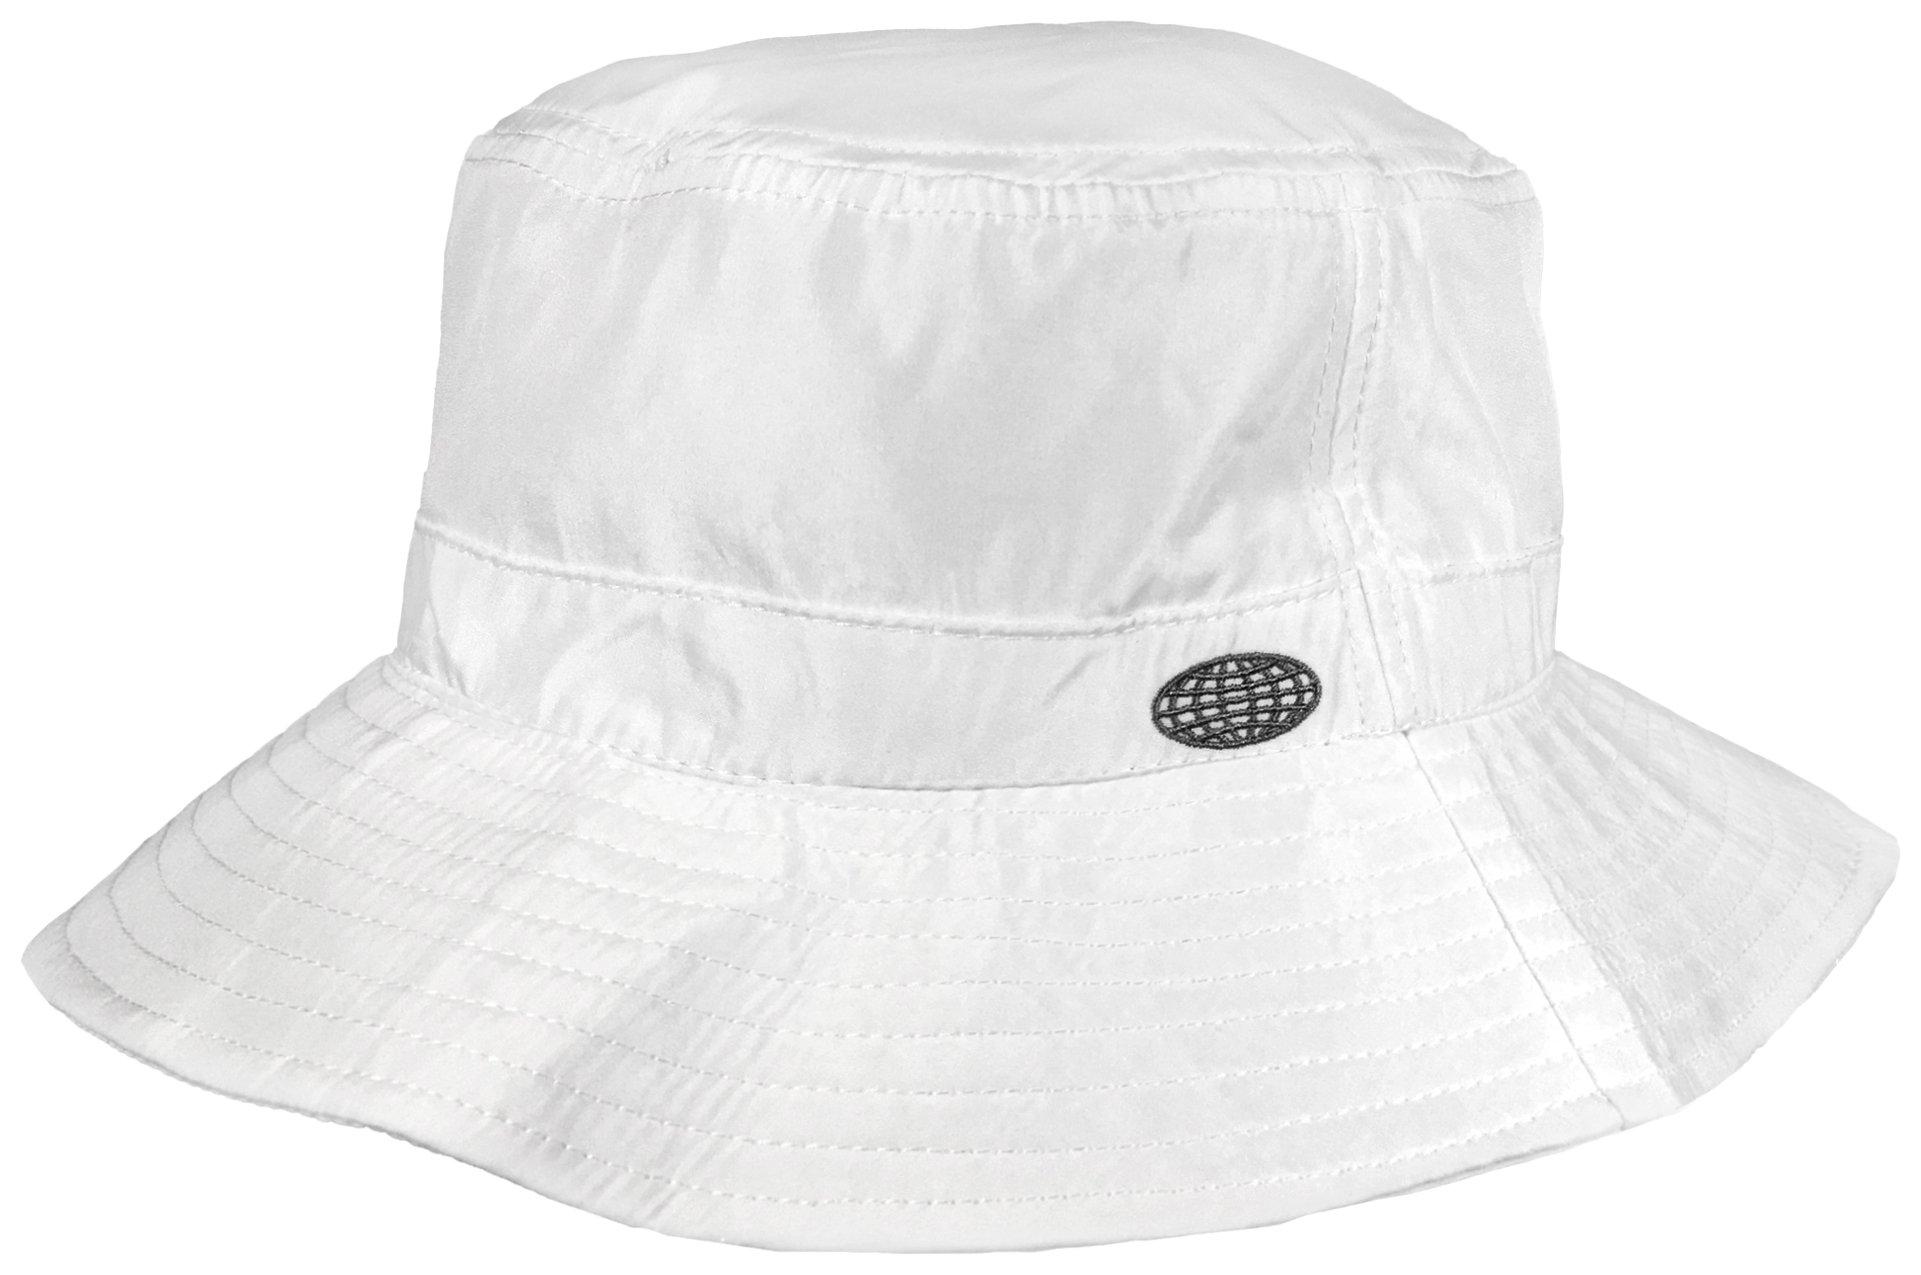 Unisex Solid Bucket Hat